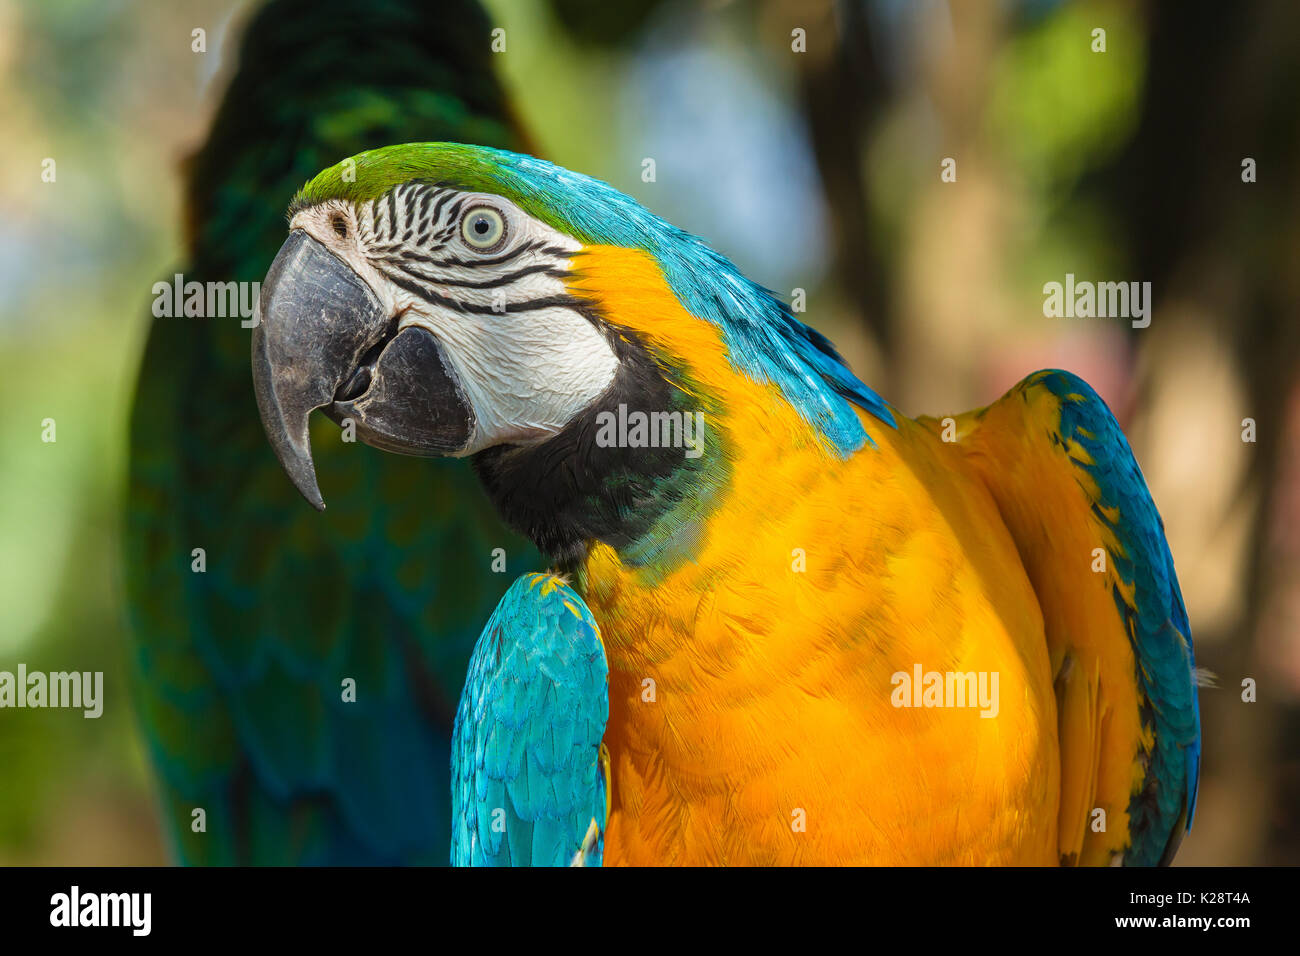 Tropical bird macaw cockatoo parrot closeup feathers colors detail photo. Stock Photo